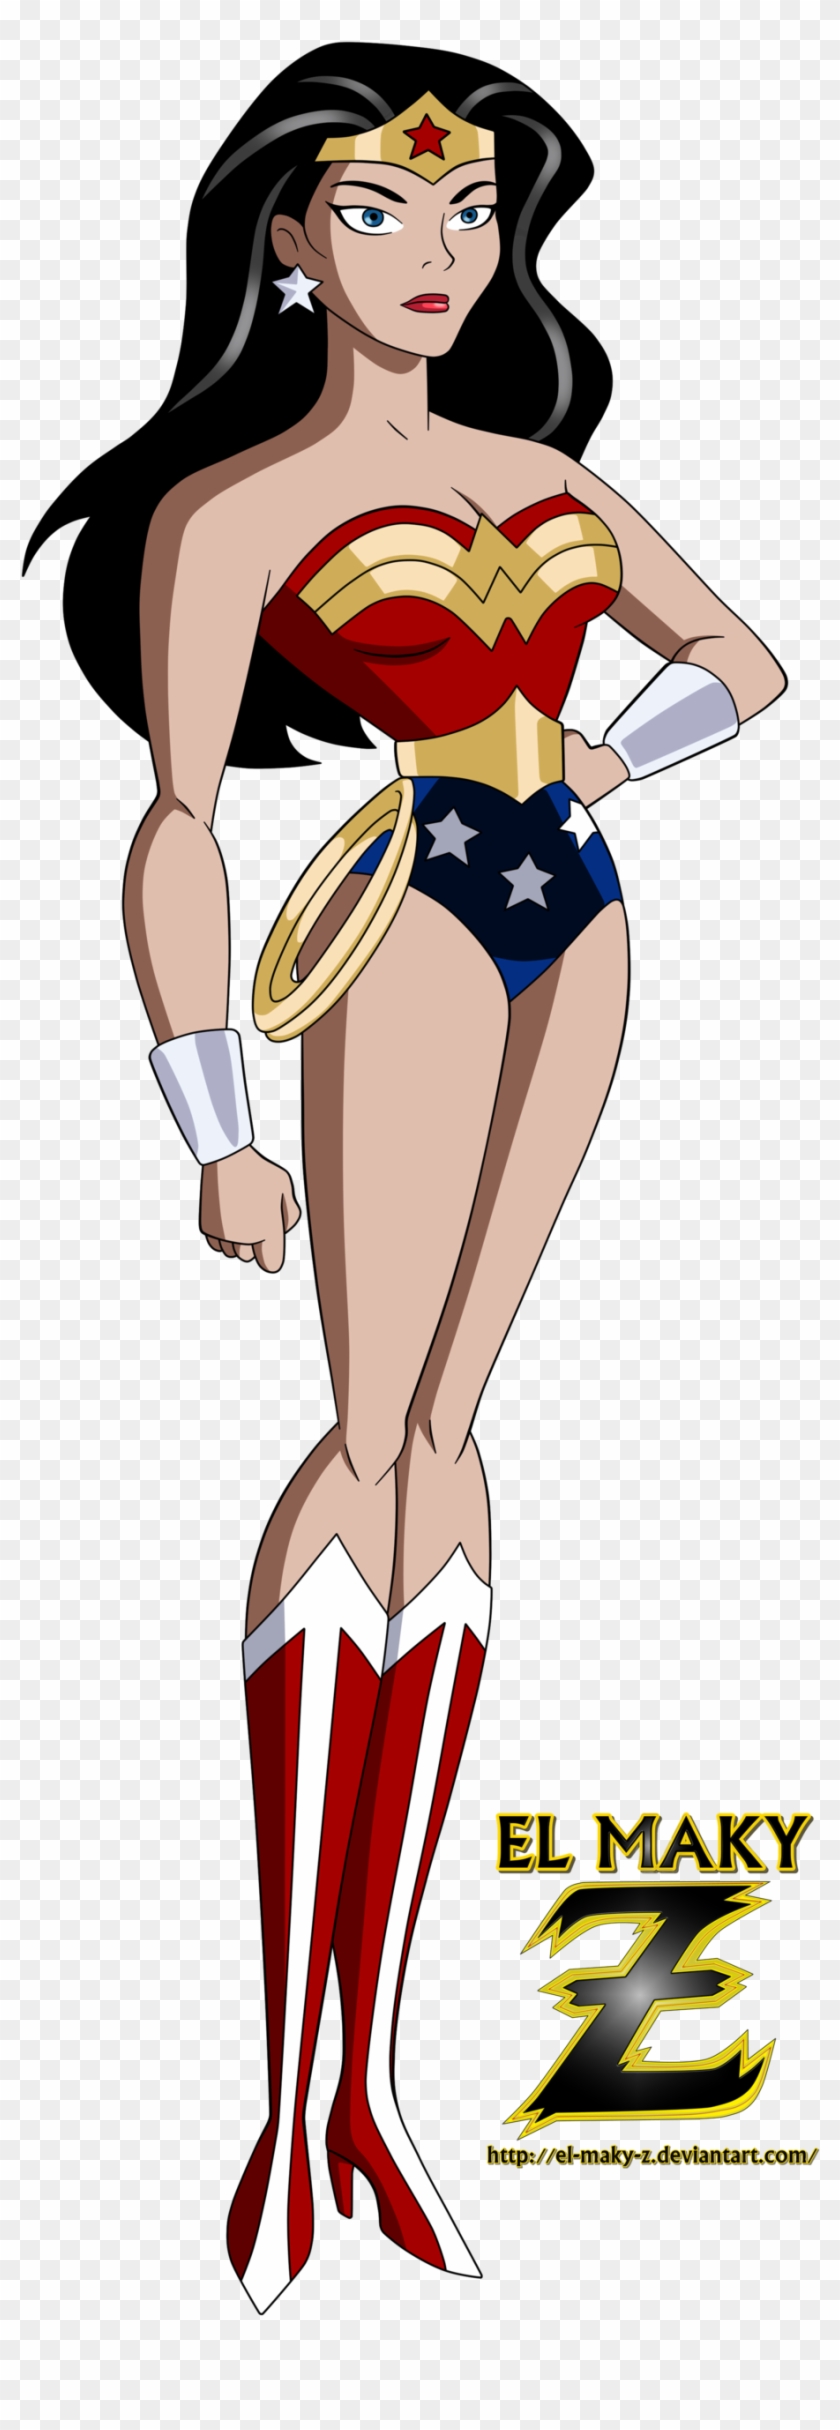 Jlu Wonder Woman By El Maky Z - Wonder Woman Cartoon Movie - Free  Transparent PNG Clipart Images Download